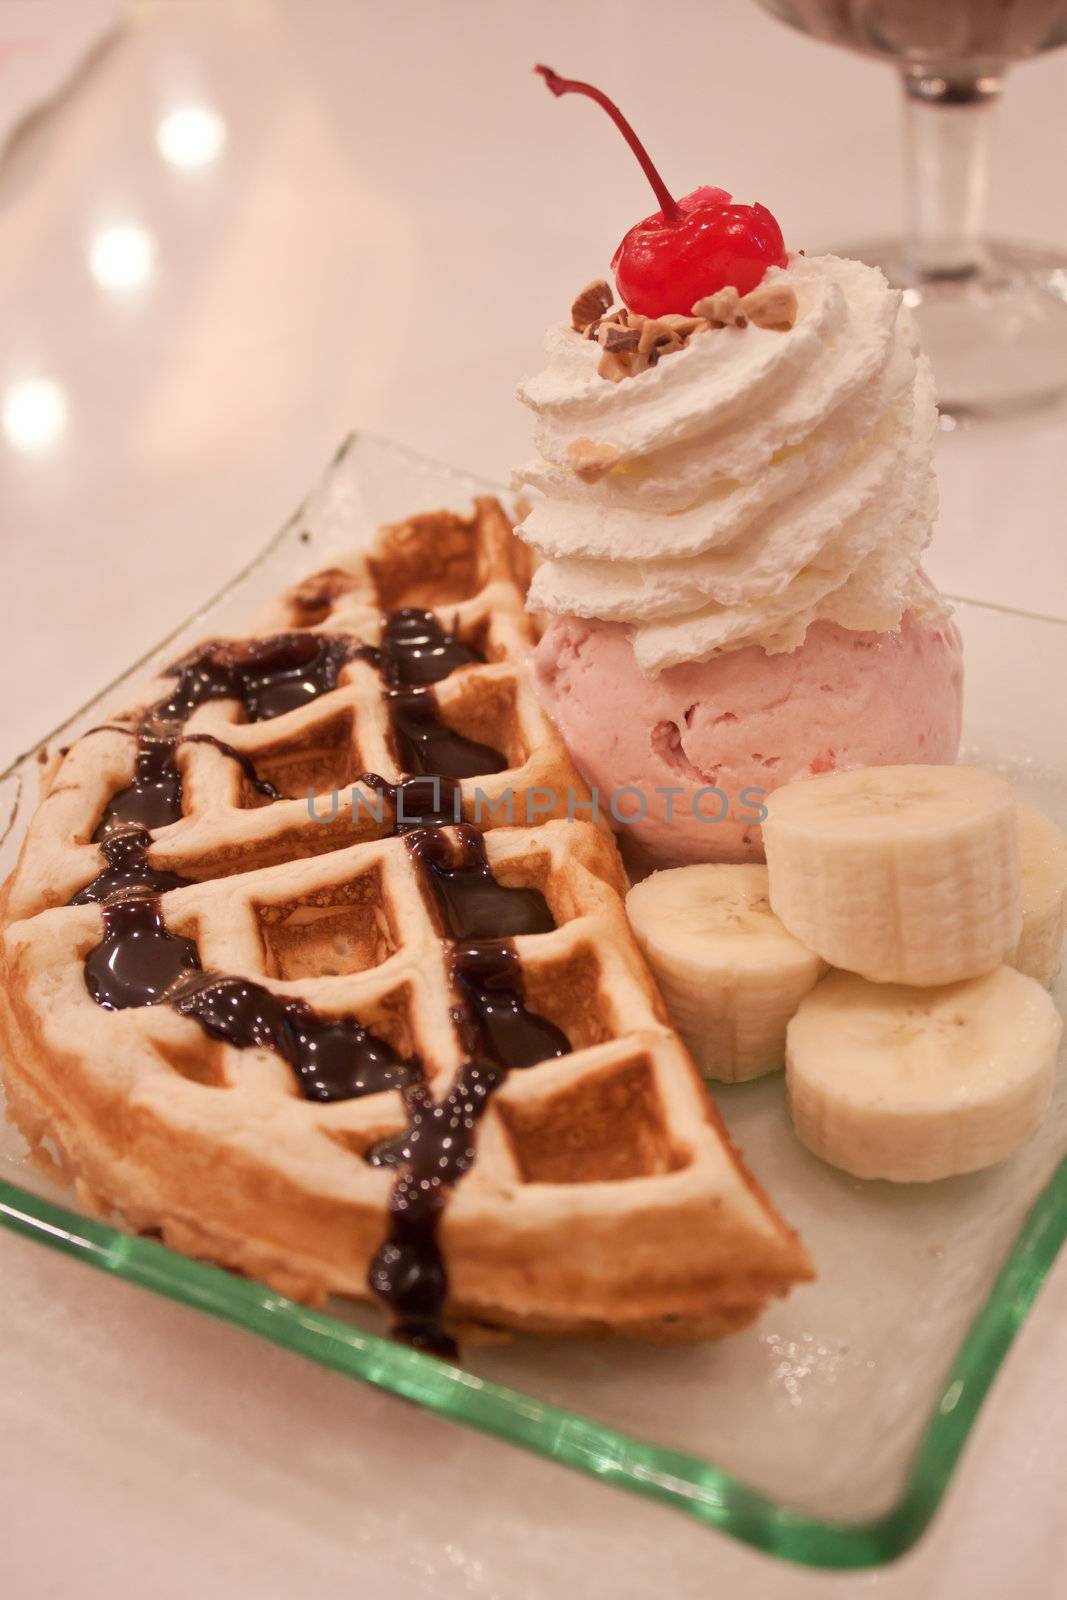 Waffle and icecream by artemisphoto